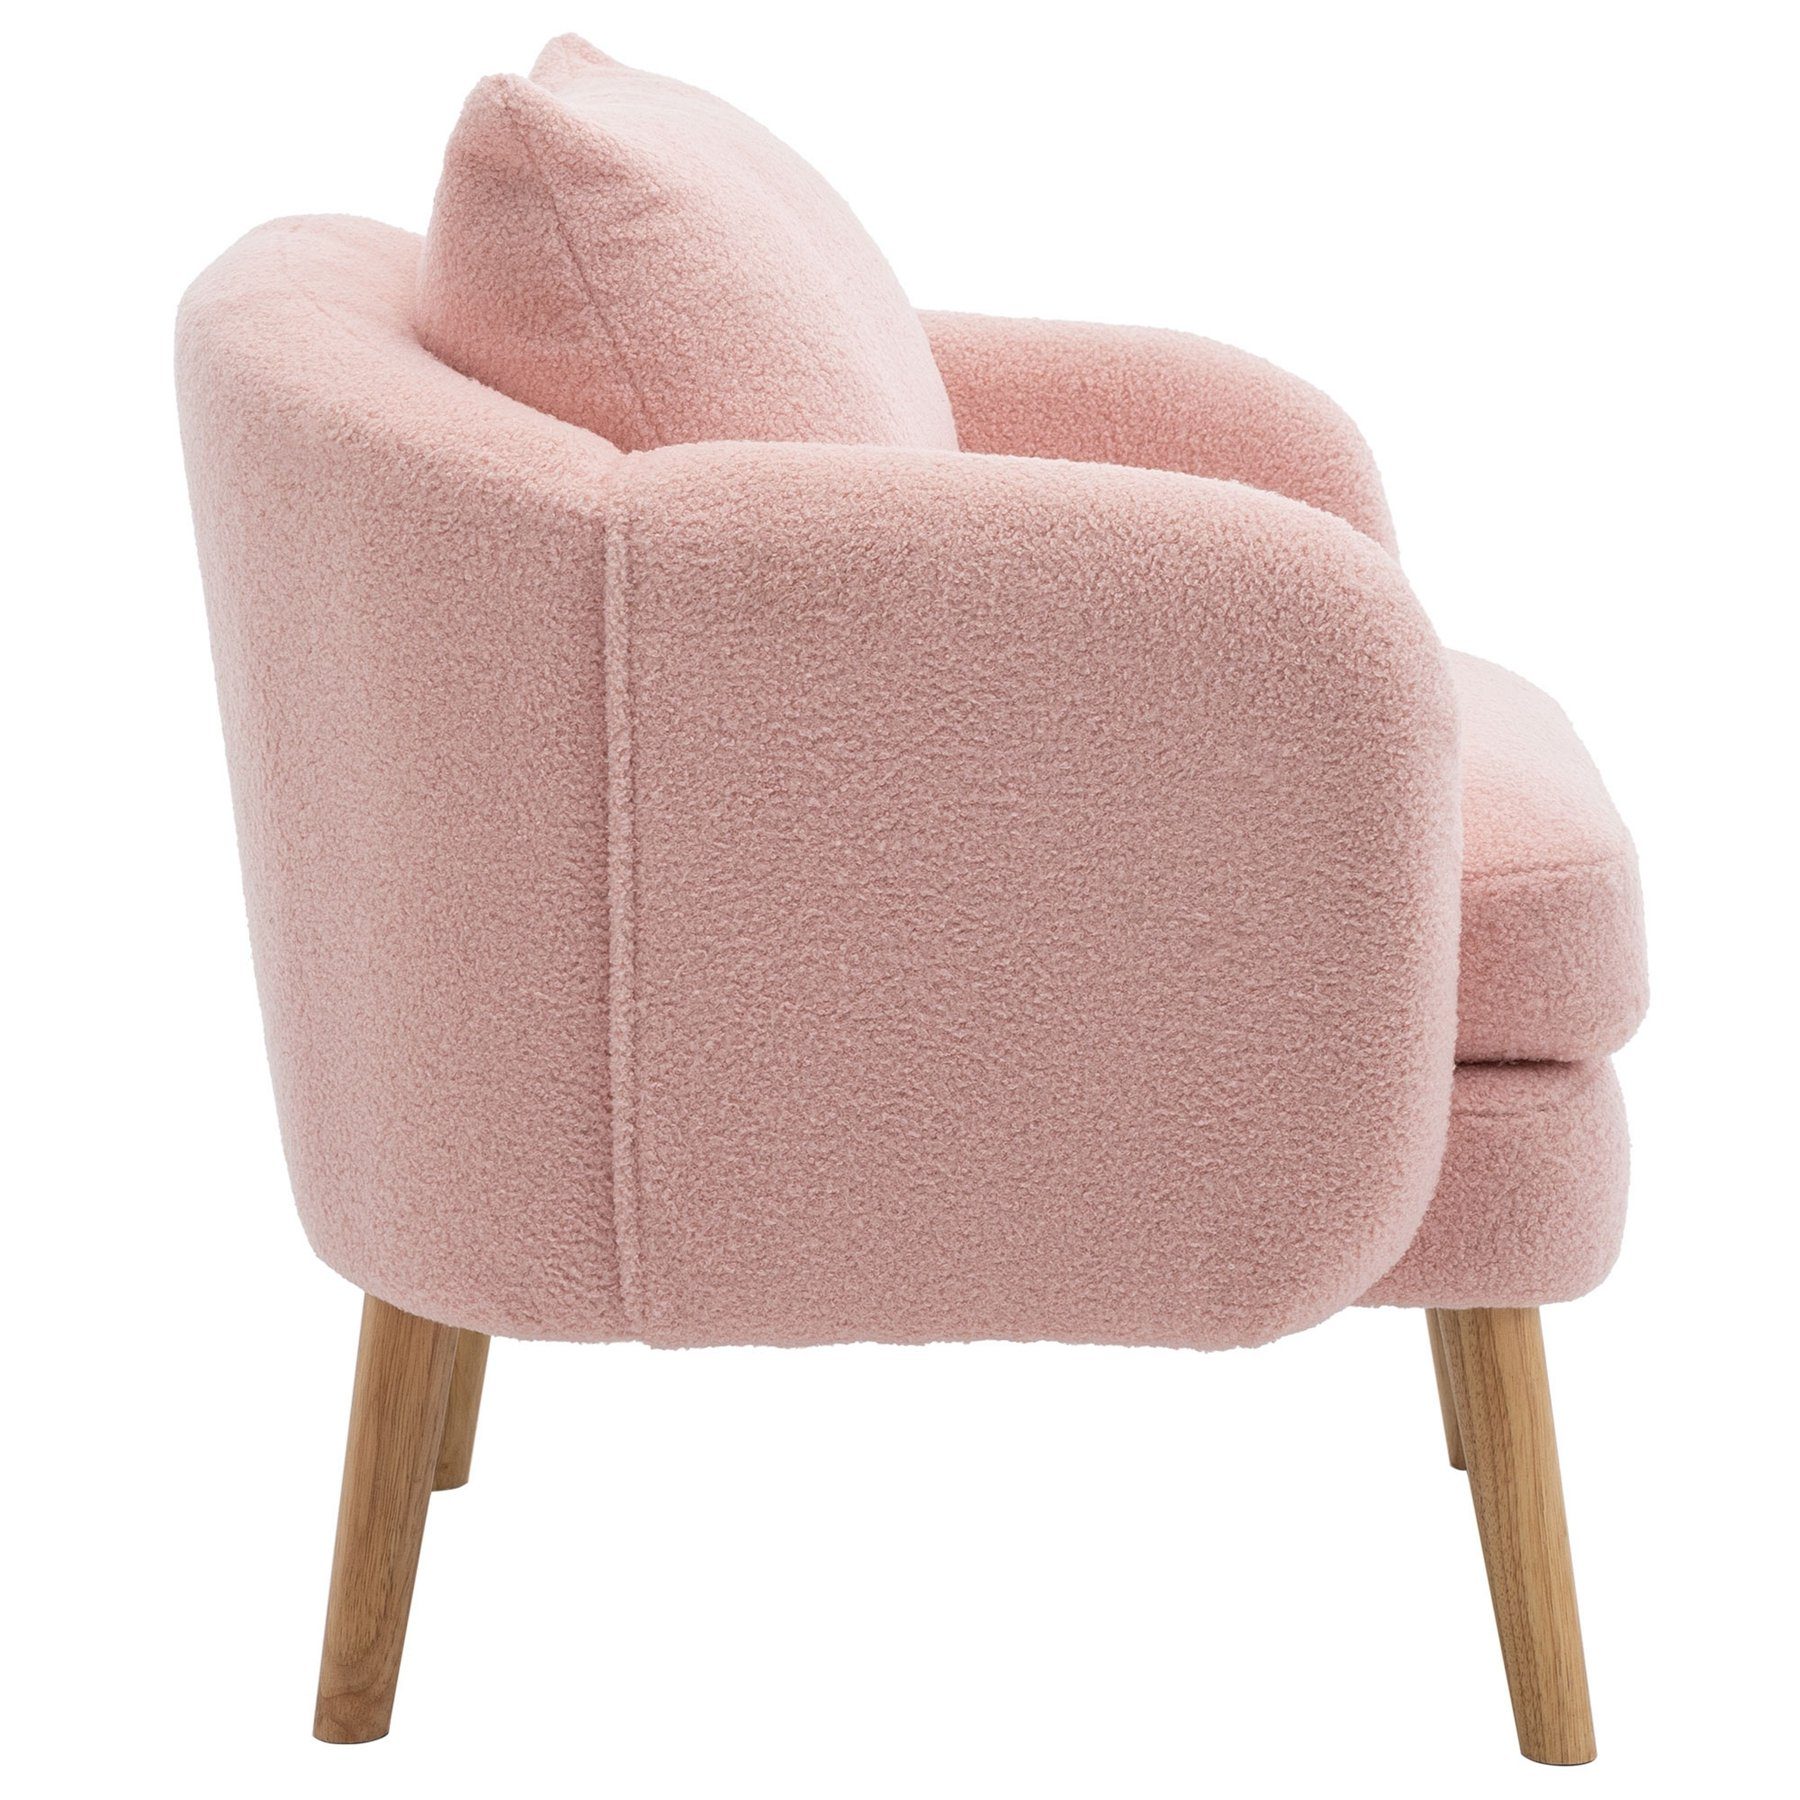 Sessel Samt mit Stuhl Teddy Relaxsessel Sofa-Sessel,Freizeit rosa Celya Kissen,einzelner